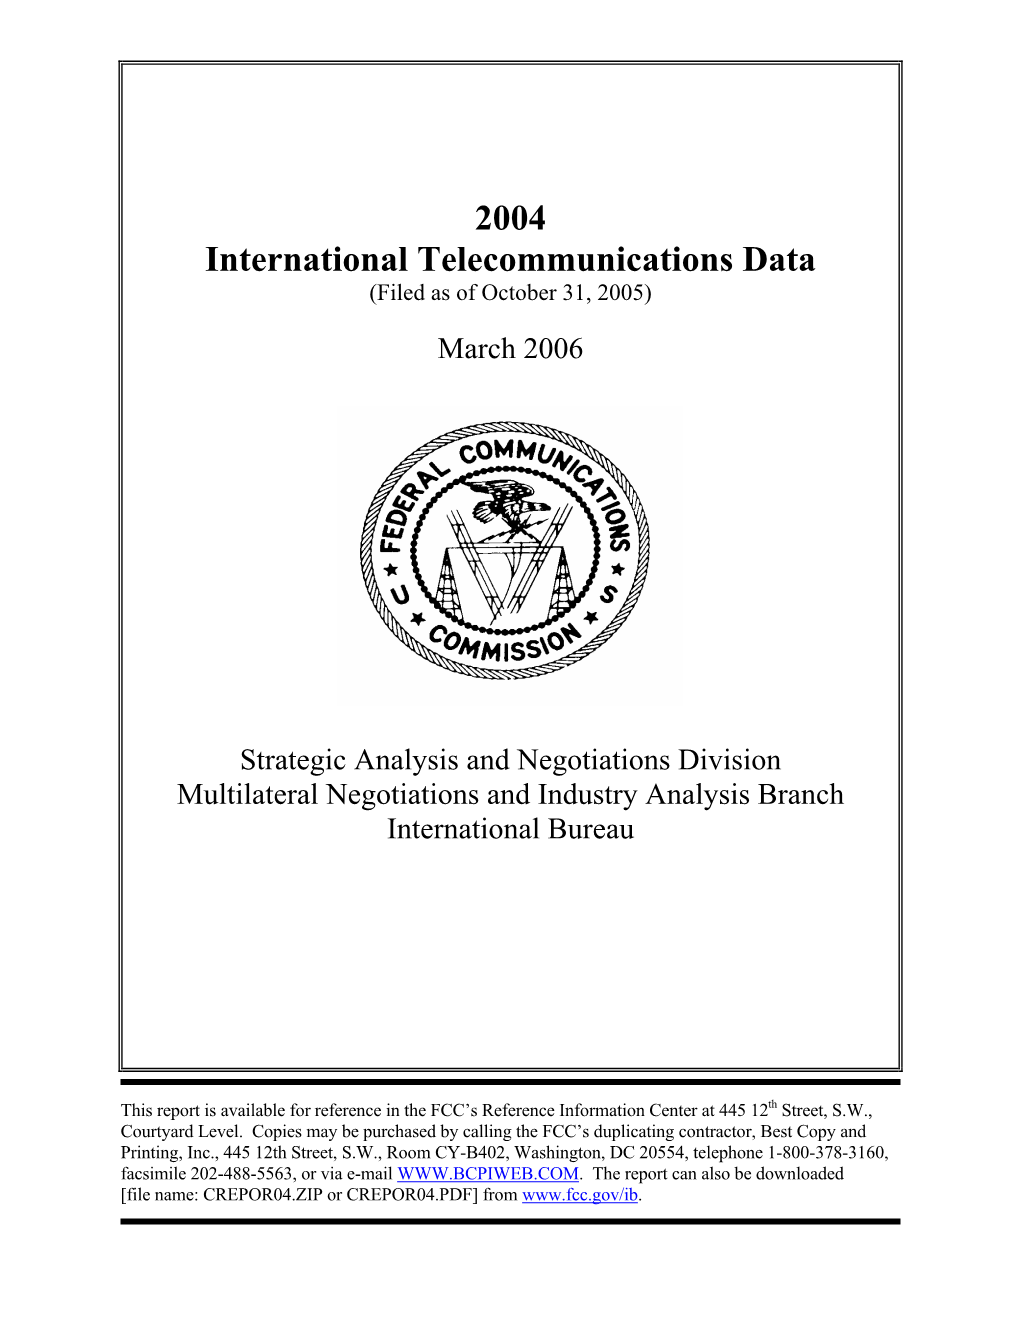 2004 International Telecommunications Data (Filed As of October 31, 2005)